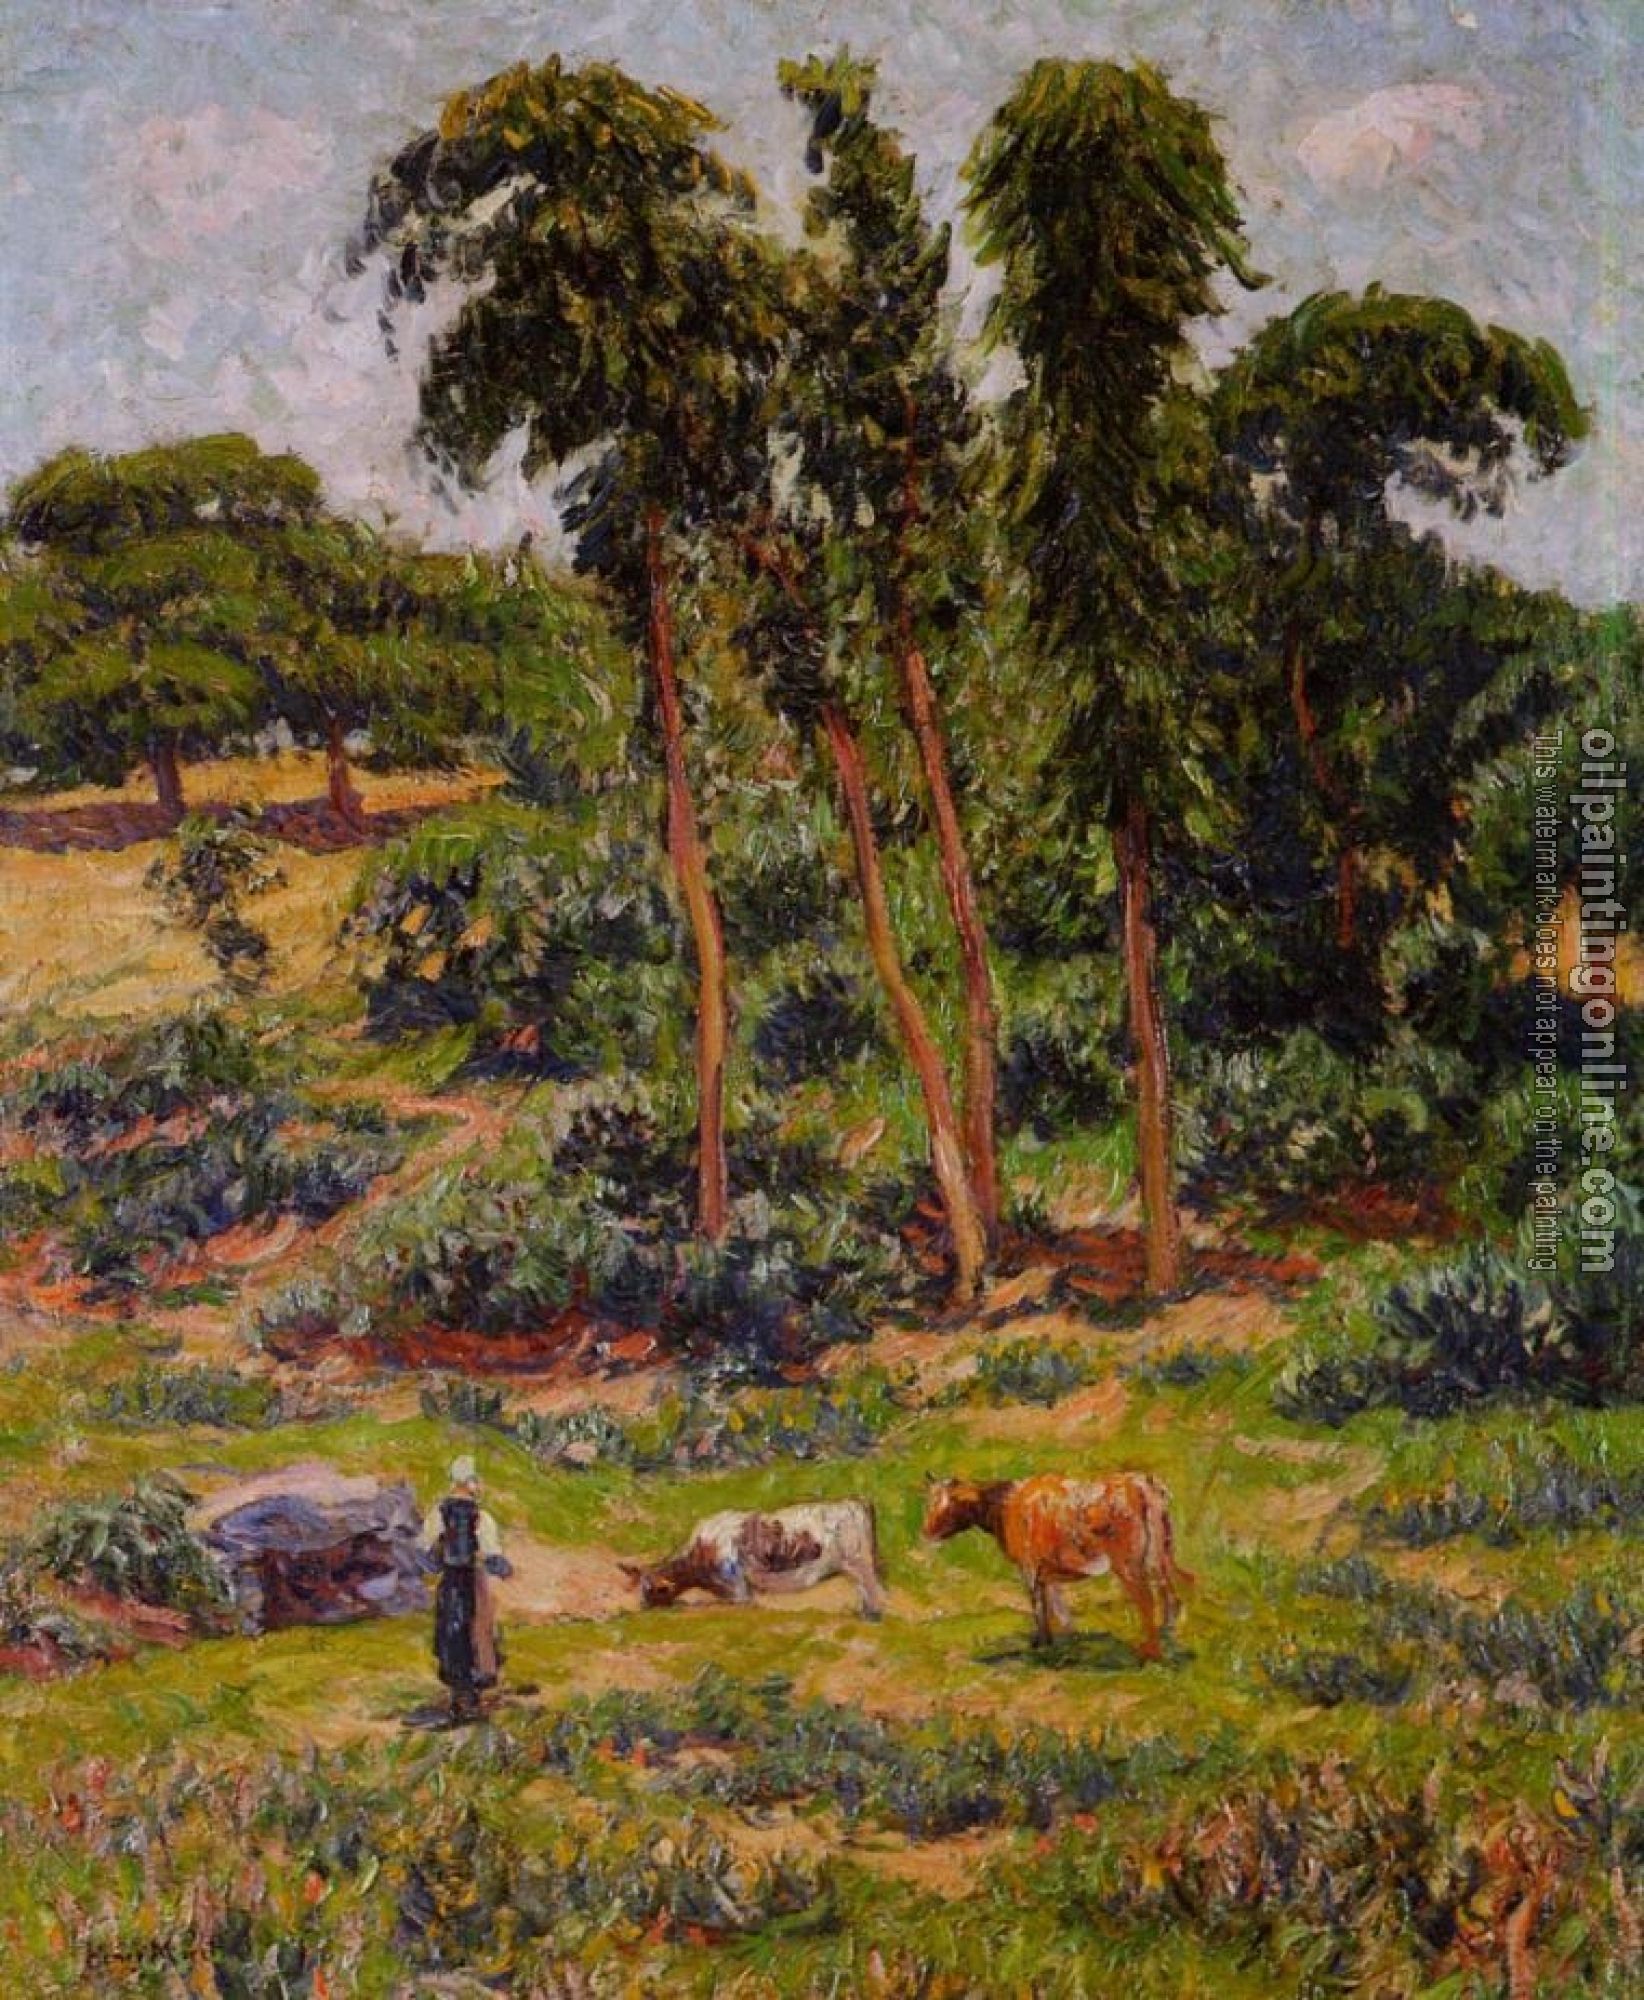 Moret, Henri - Peasant and Her Herd